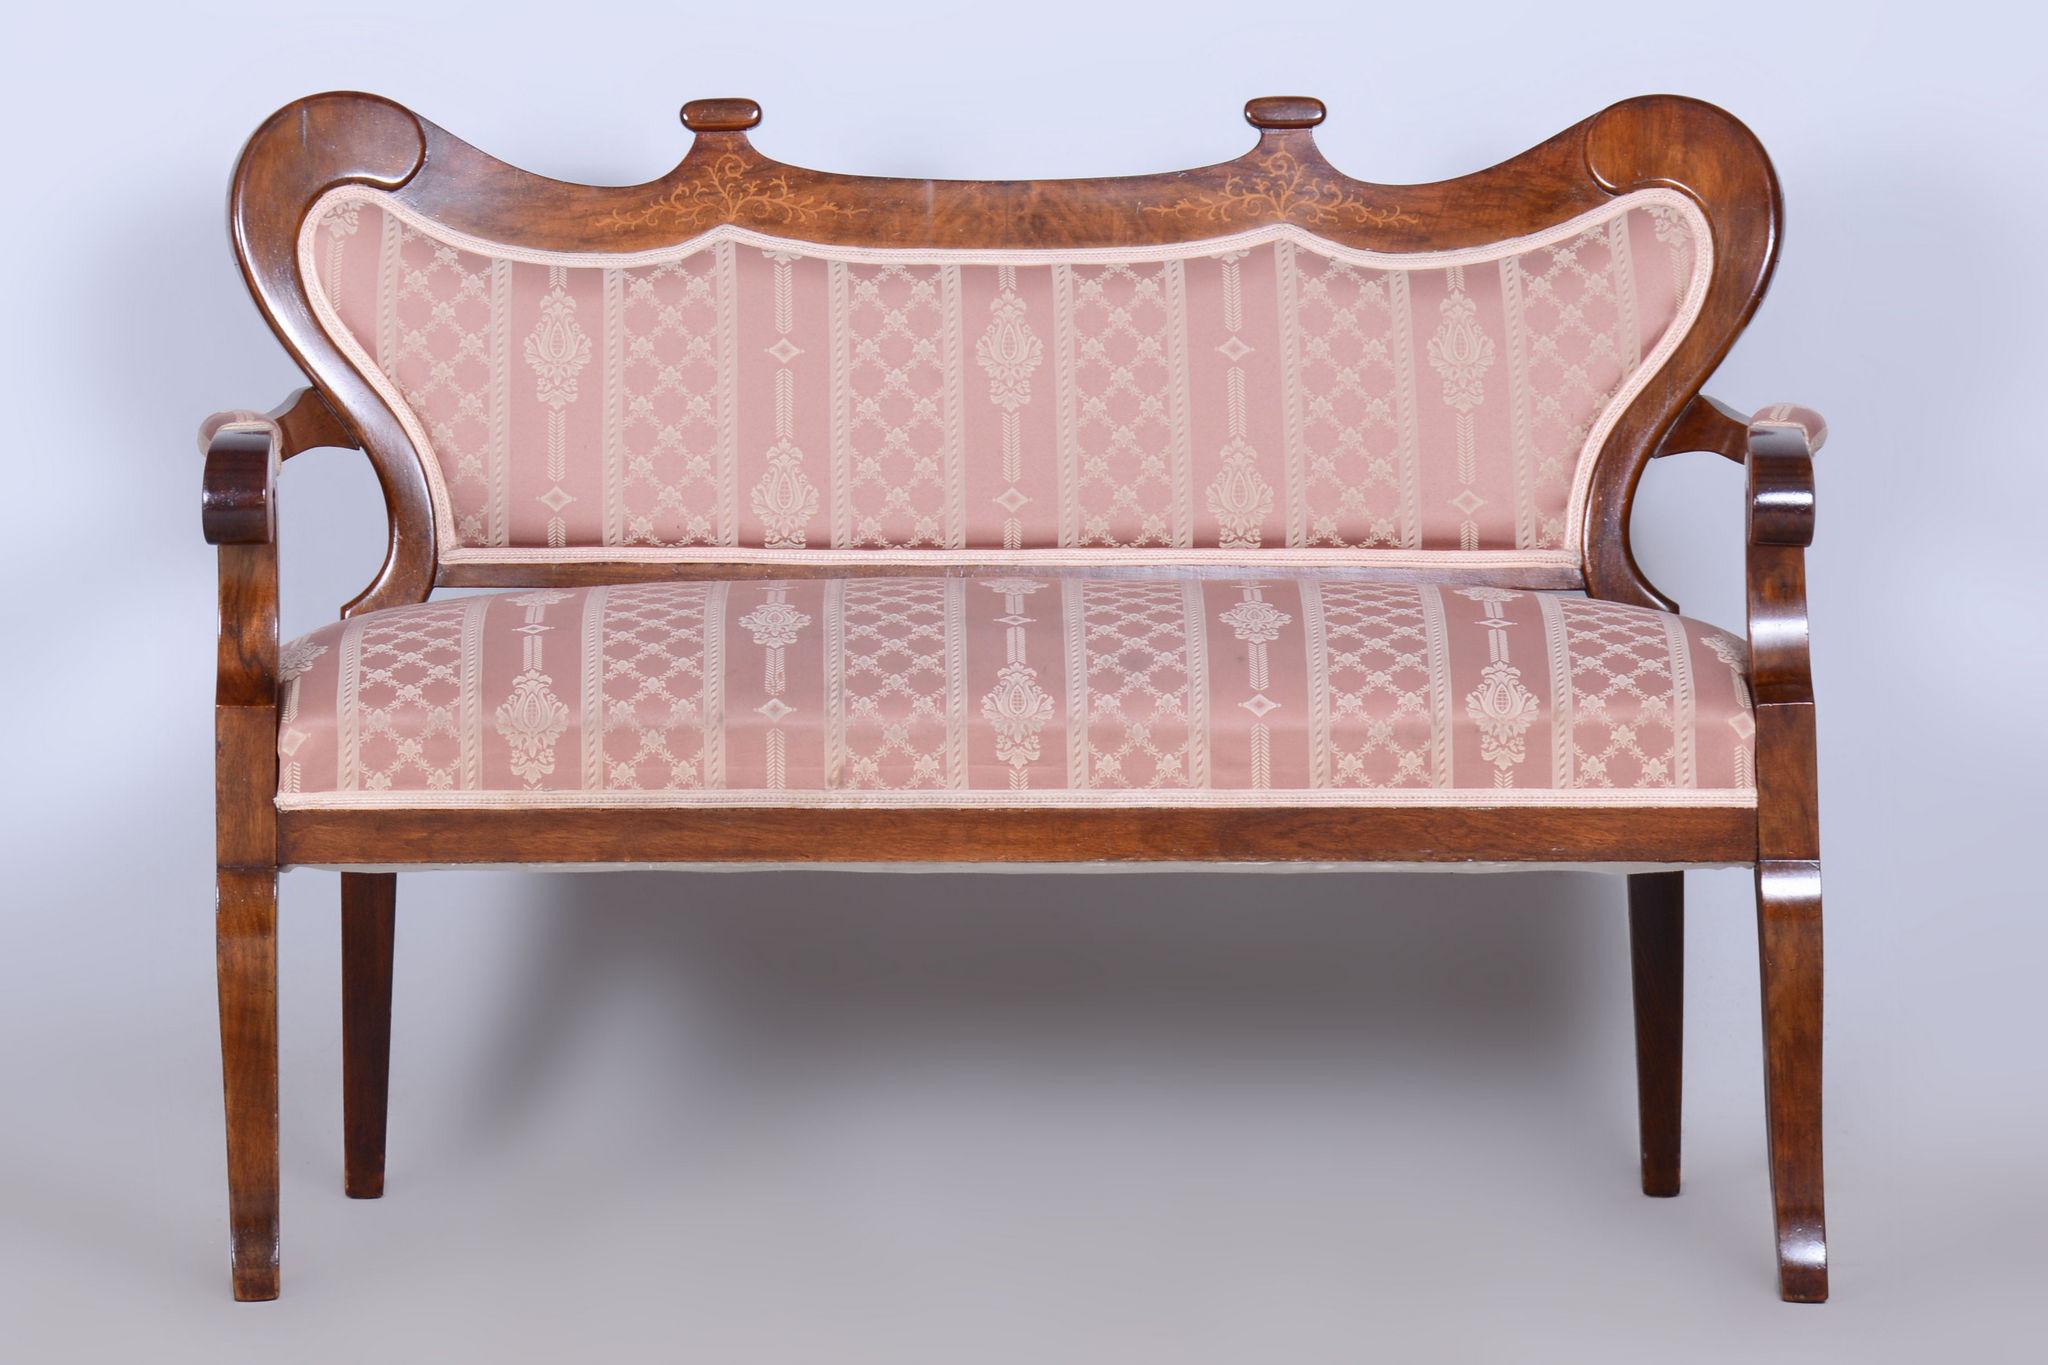 Restored Biedermeier Seating Set, Oak Walnut, Stable Constructon, Austria, 1840s For Sale 12